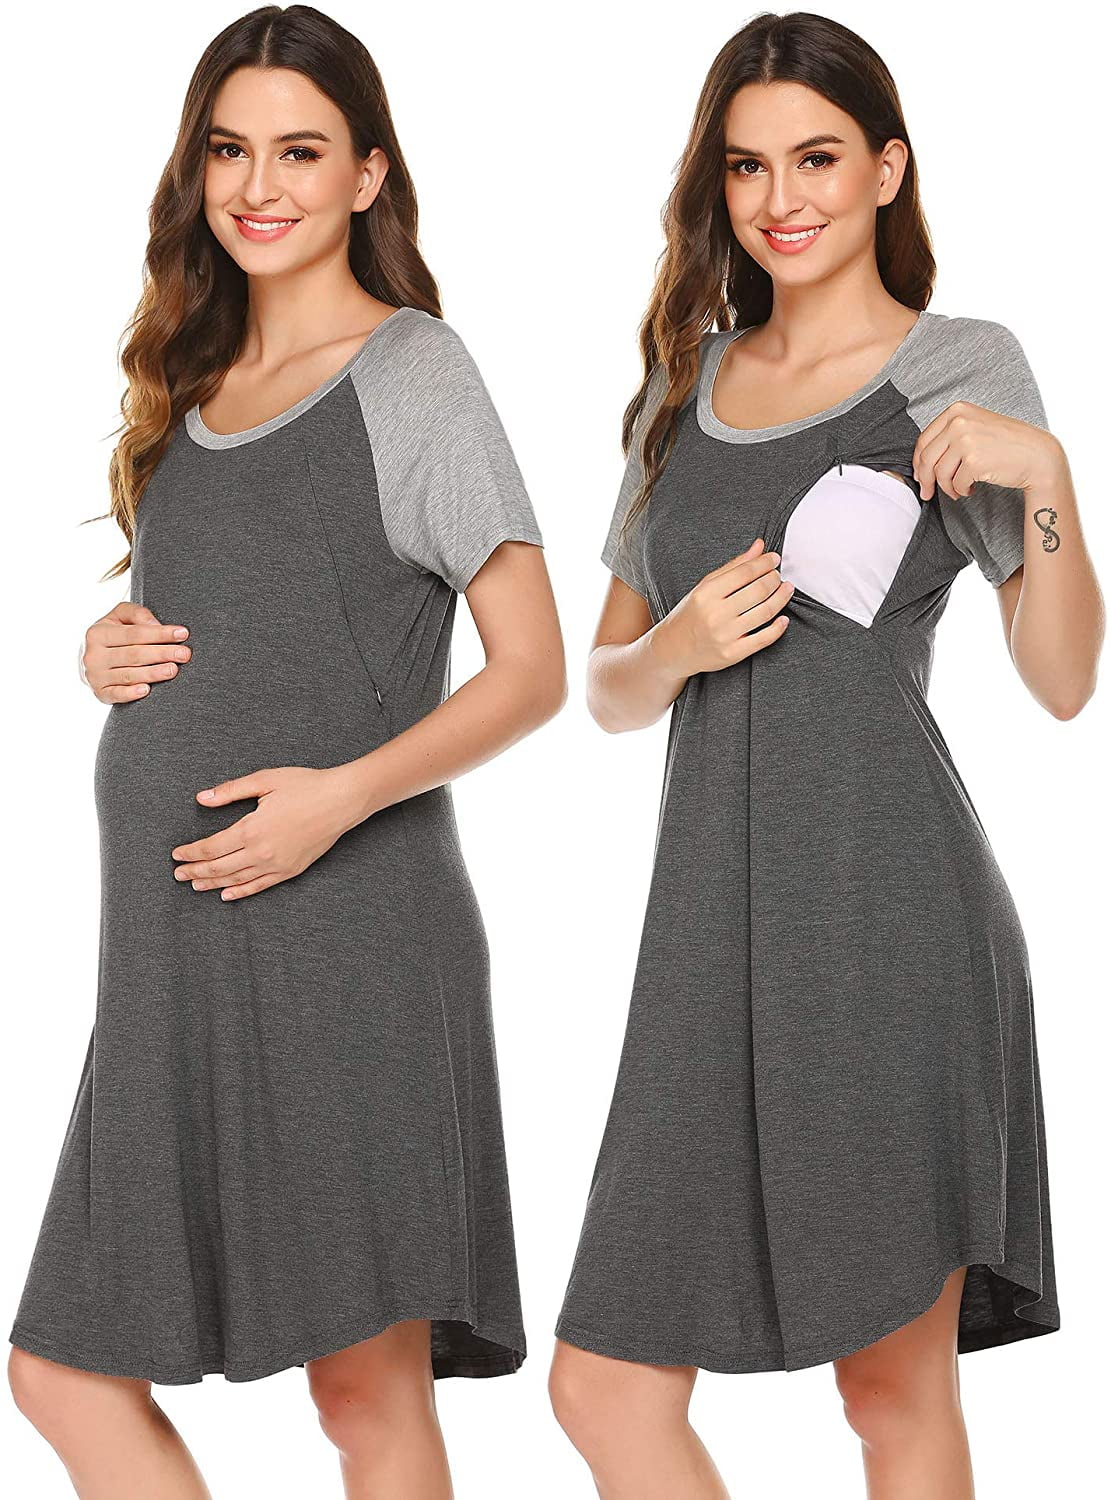 Peauty 3 in 1 Delivery/Labor/Nursing Nightgown/Maternity Hospital Gown Postpartum Zipper Breastfeeding Sleepwear